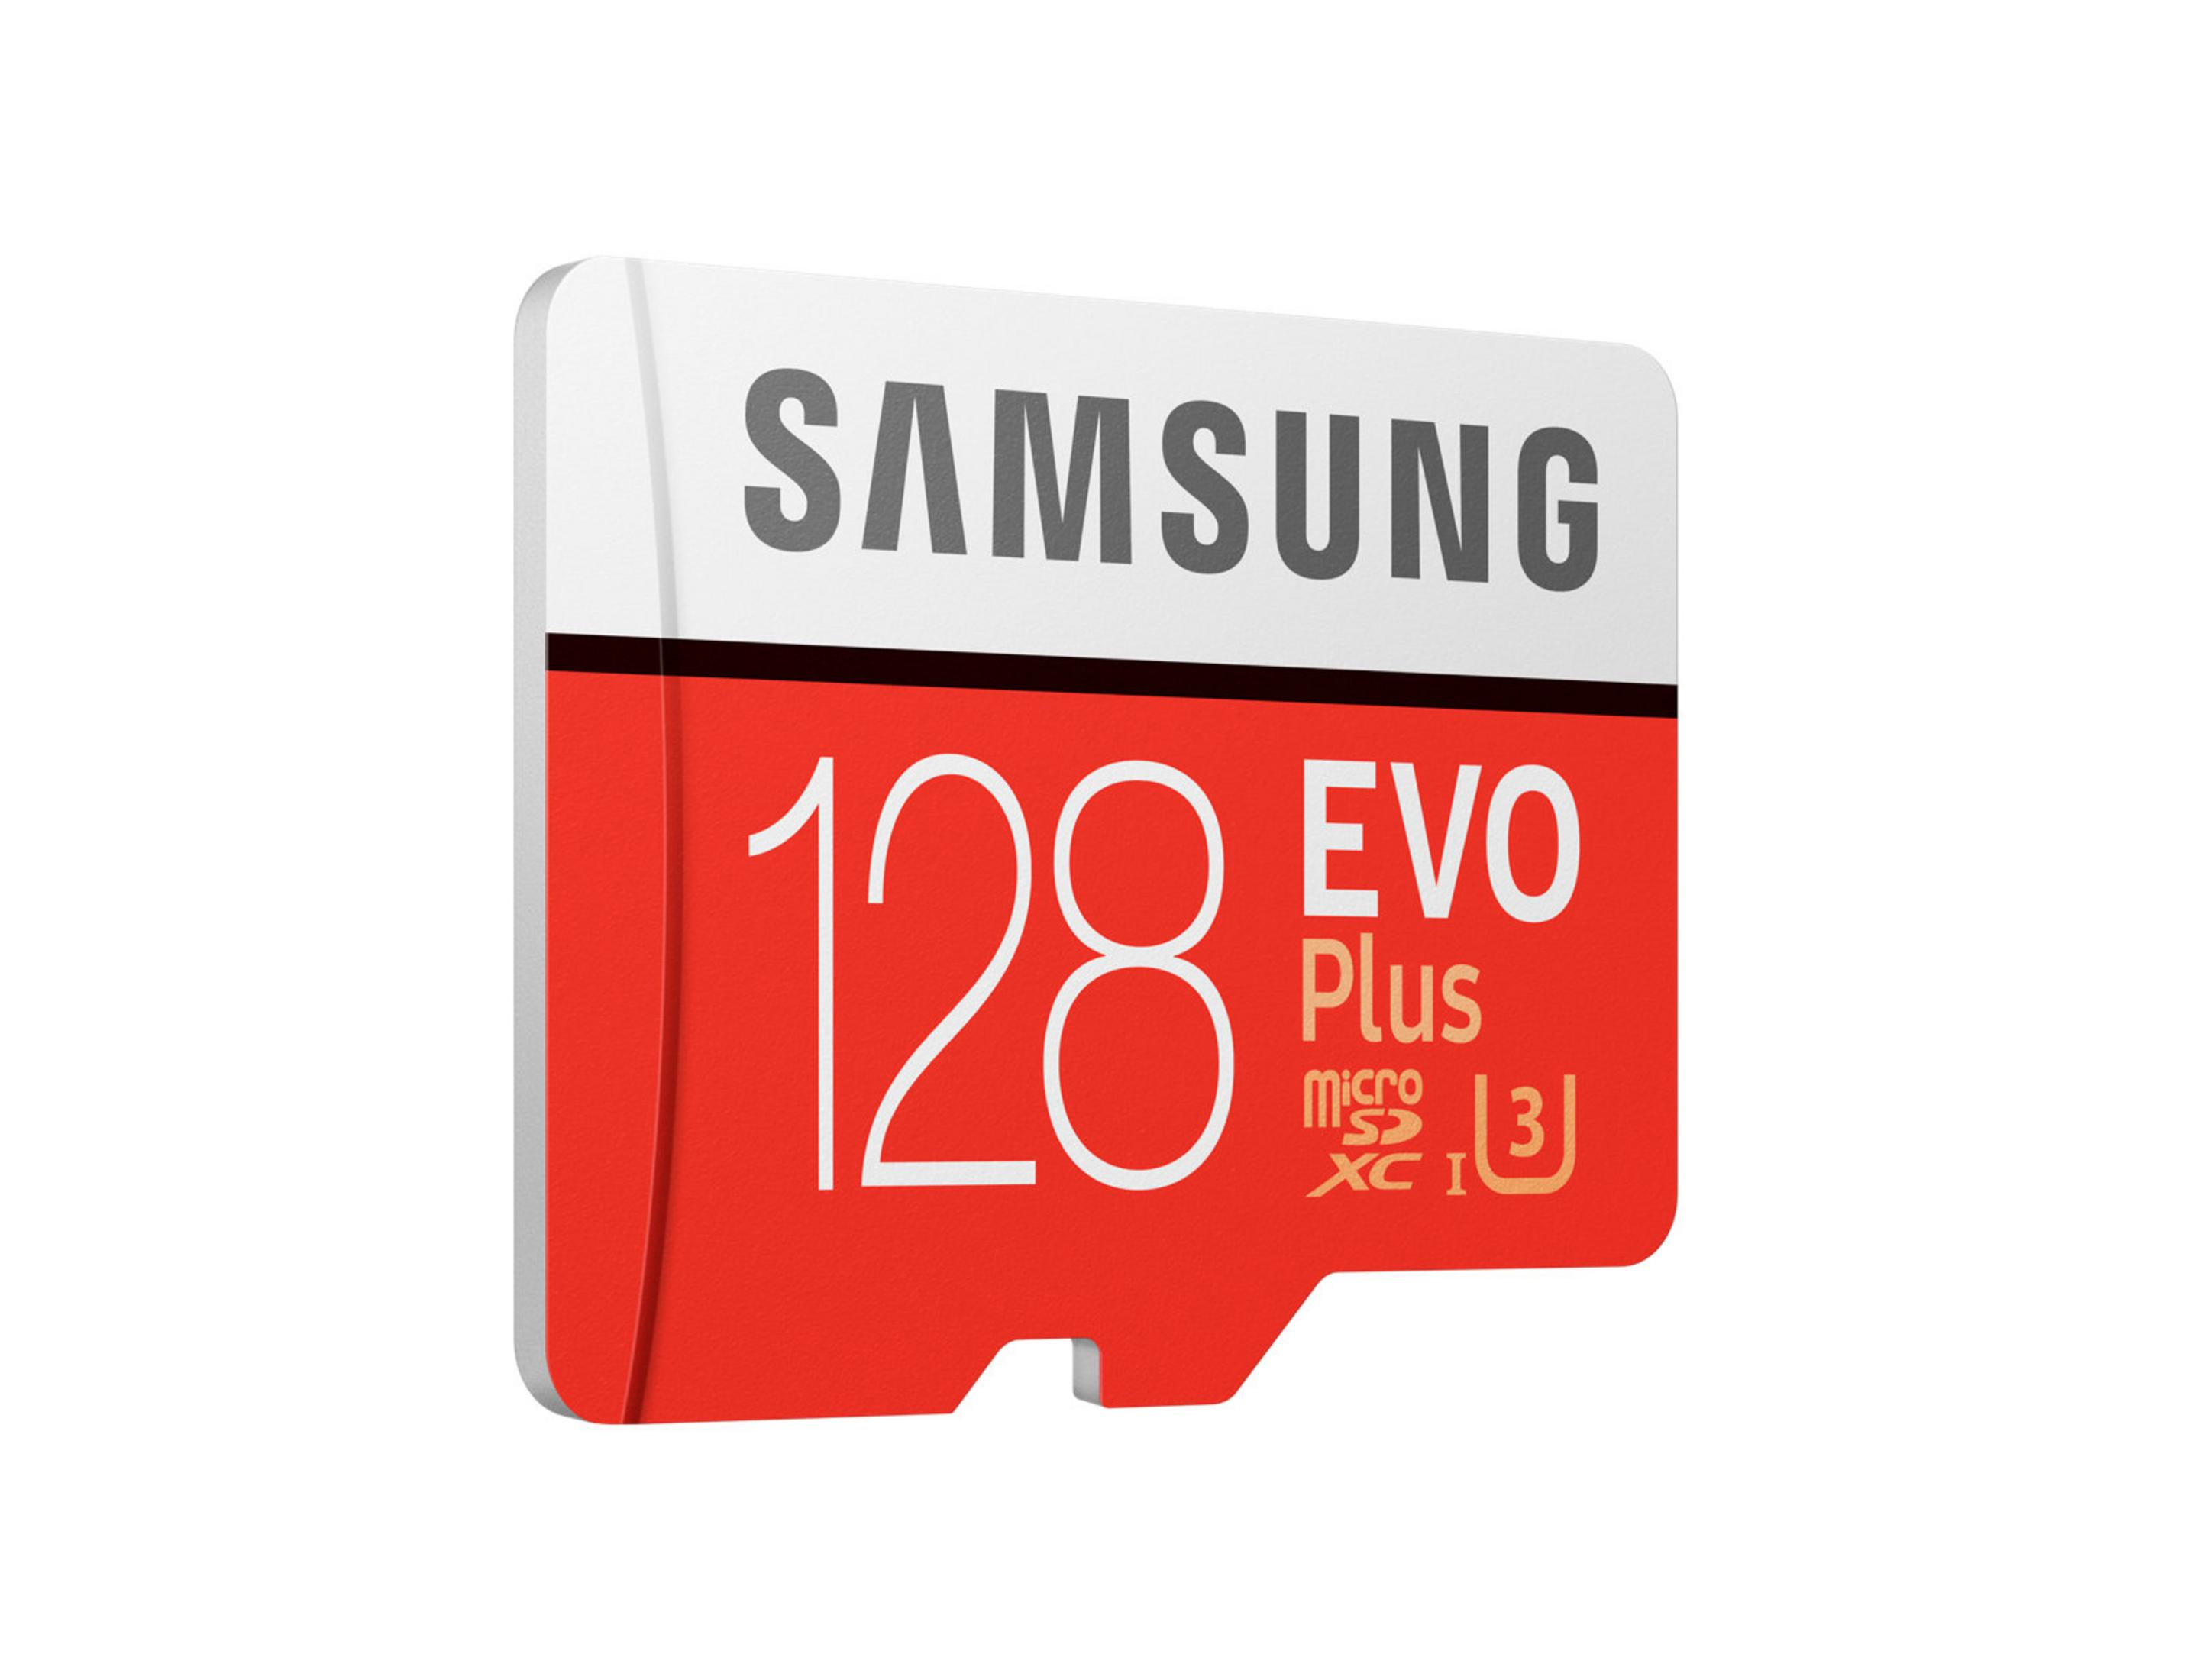 Micro-SDXC MB/s Speicherkarte, 128GB PLUS, MB-MC128GA-EU SAMSUNG 100 128 EVO MICROSD GB,